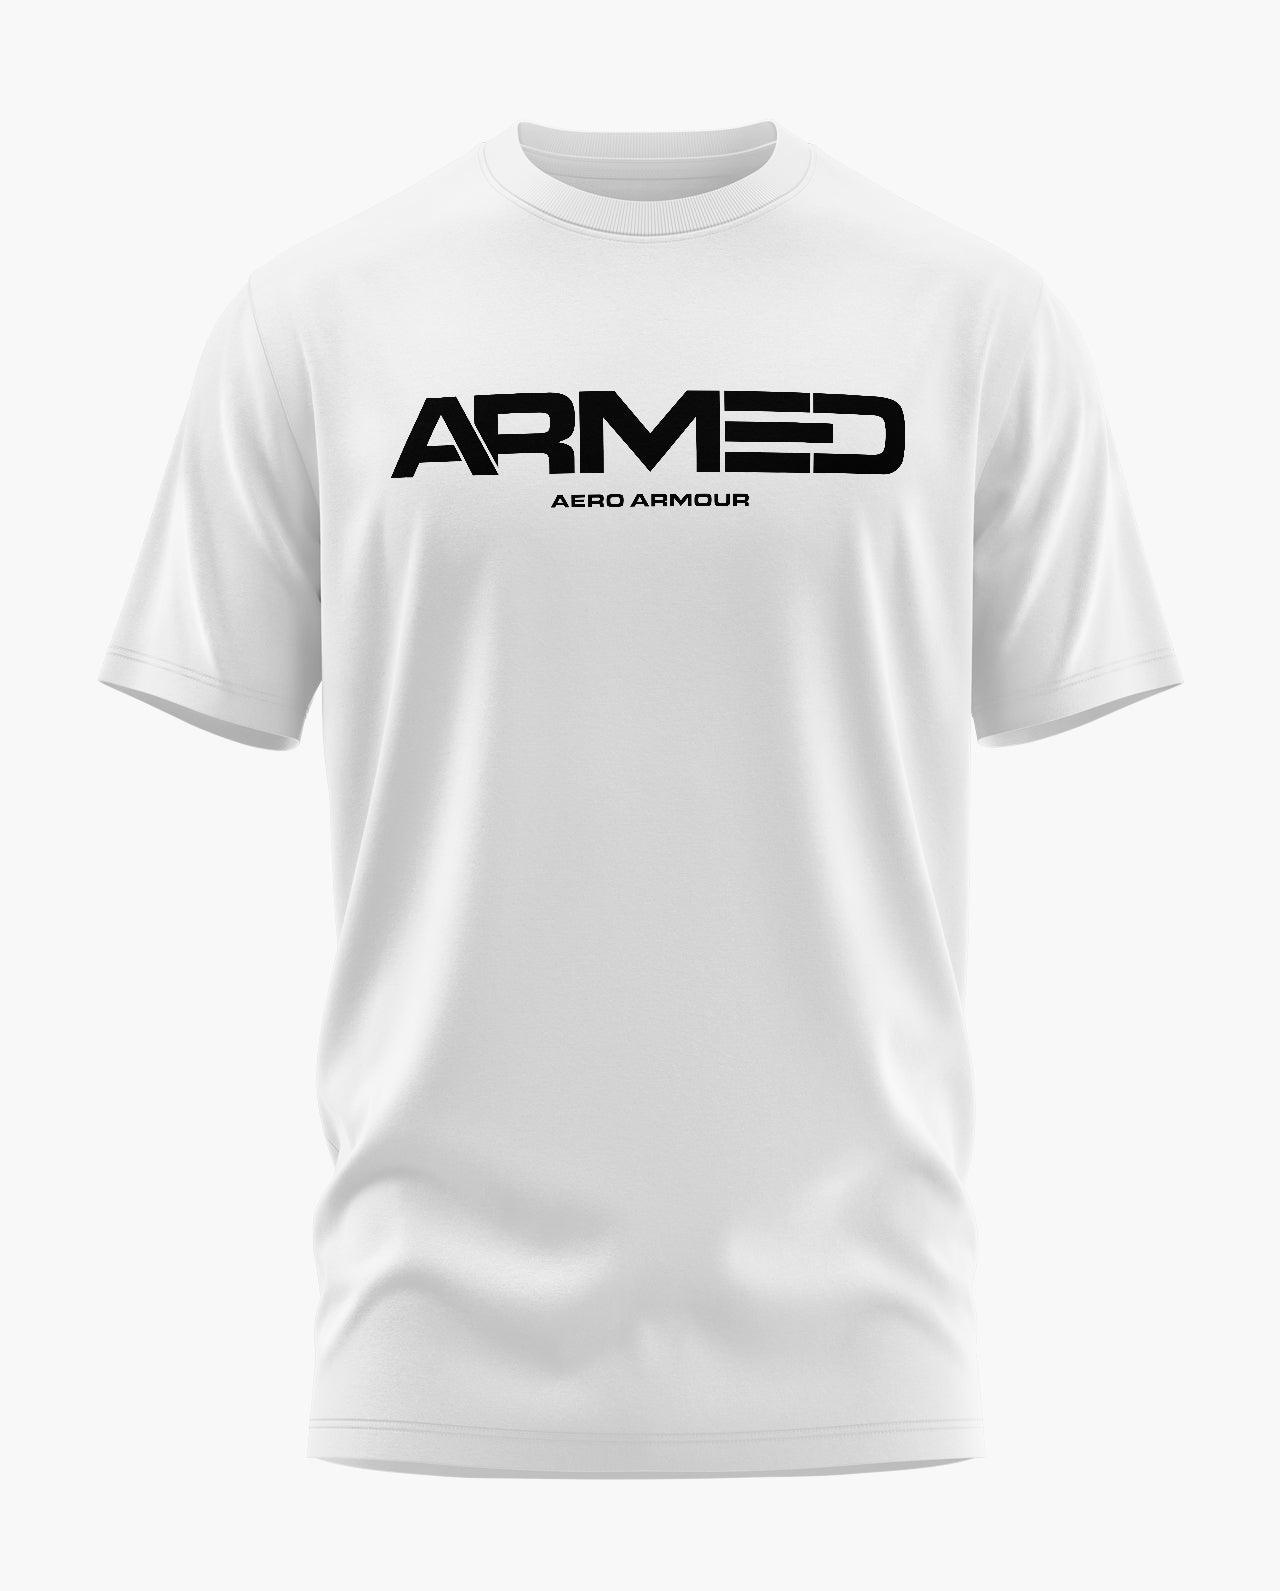 Armed T-Shirt - Aero Armour